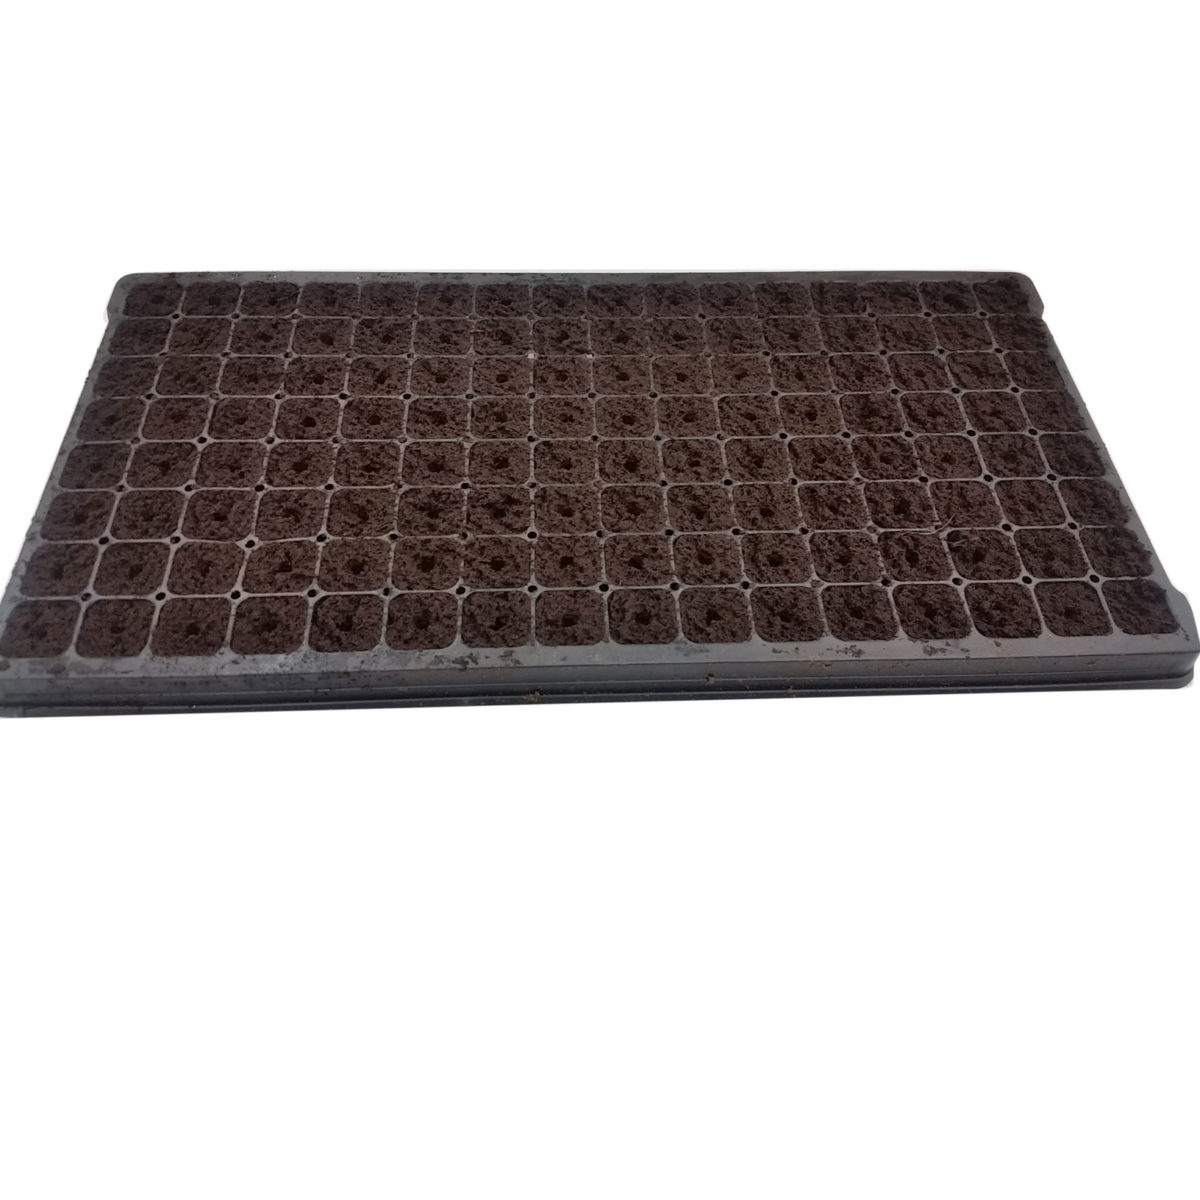 Yardwe Seedling Starter Trays 12 Cell Seed Planting Insert Plug Tray Plant Growing Plugs for Garden Soil Hydroponics Nursery 5Pcs